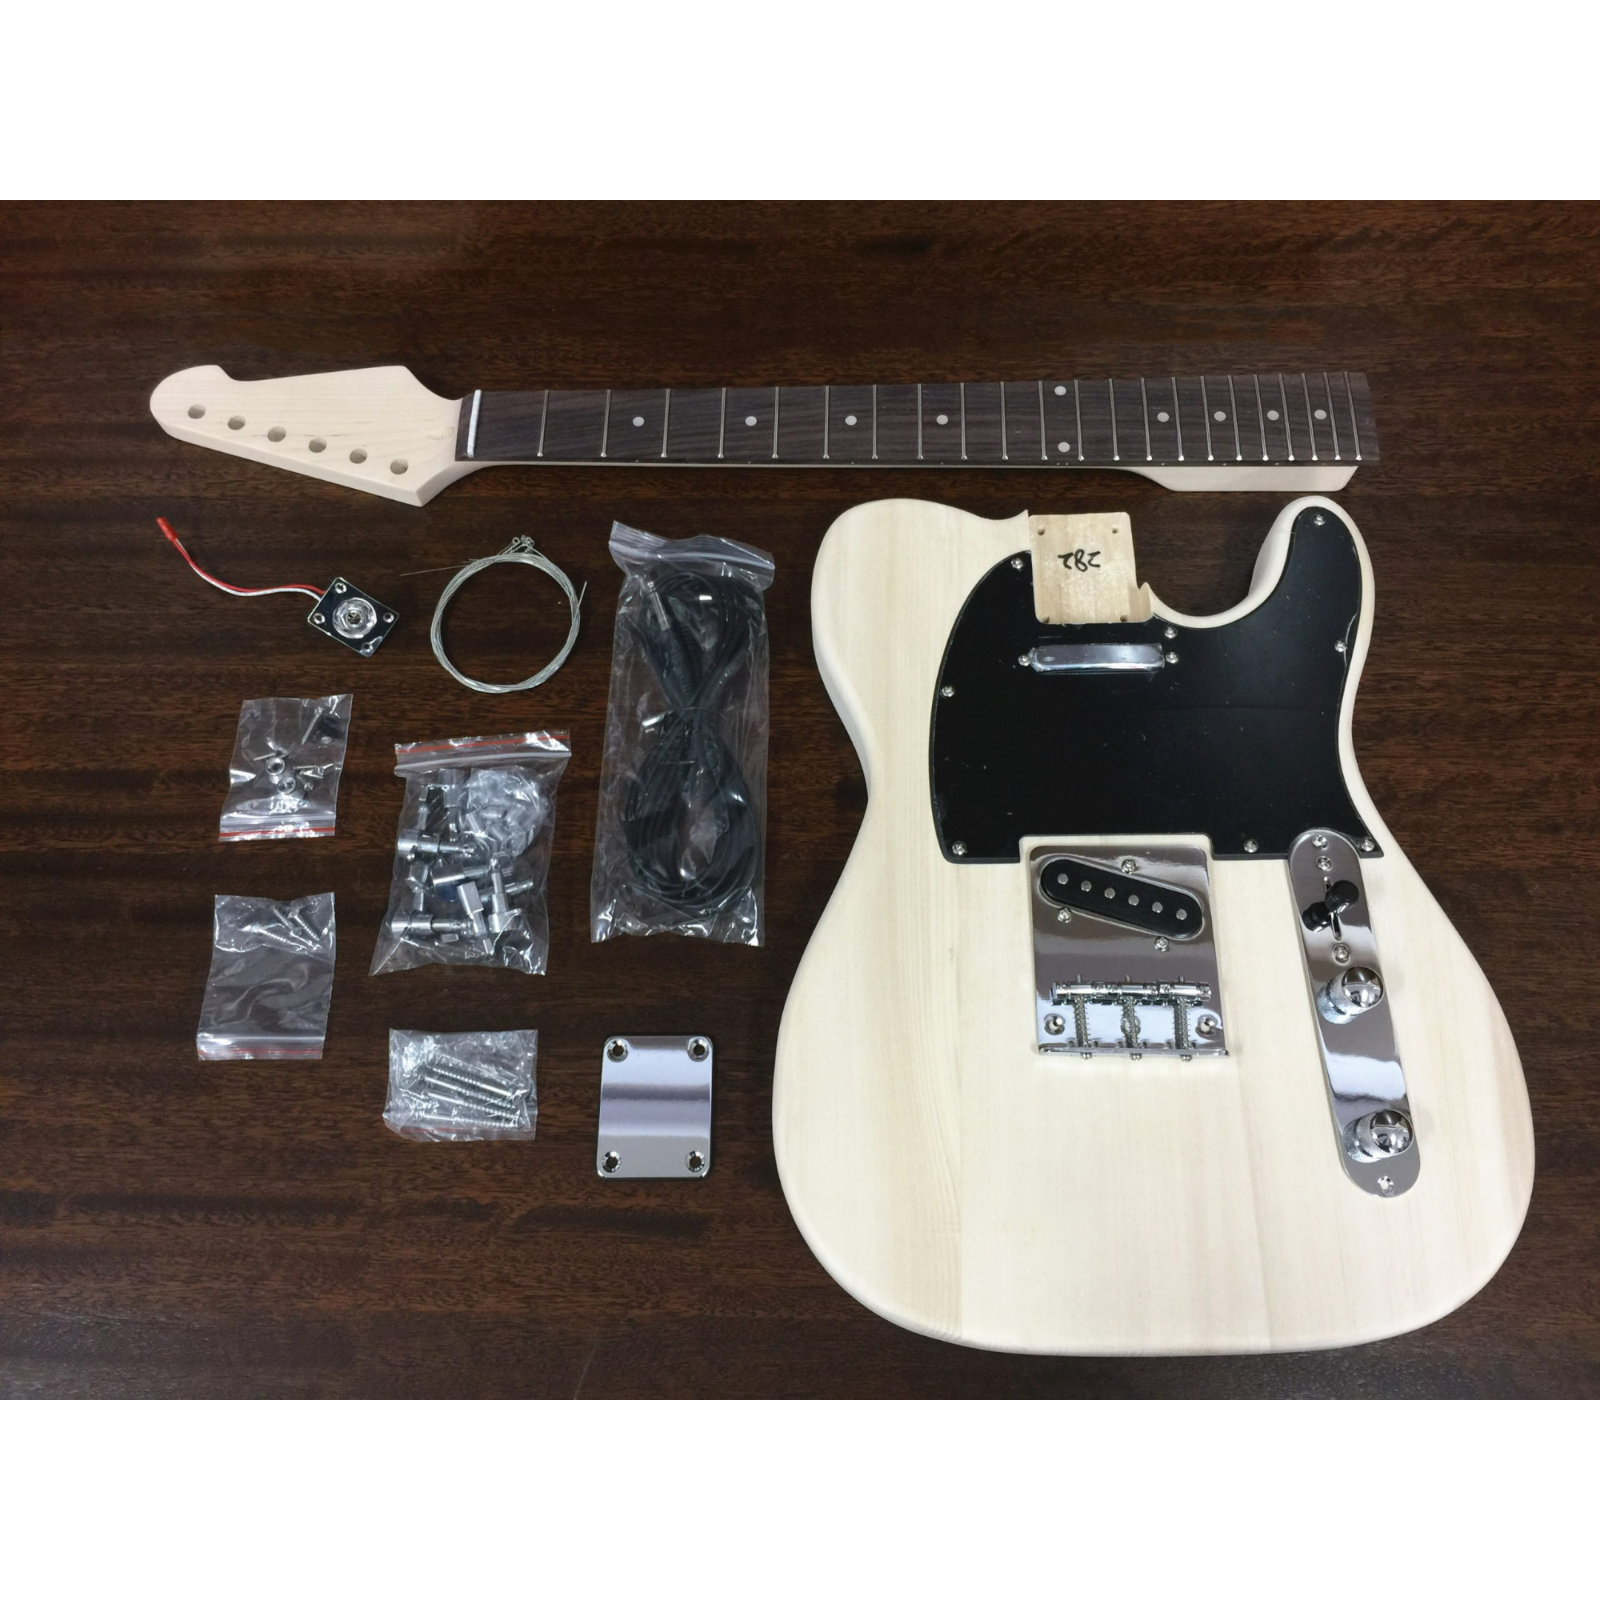 Guitar DIY Kits  Self Build Guitar Kits - HillSound